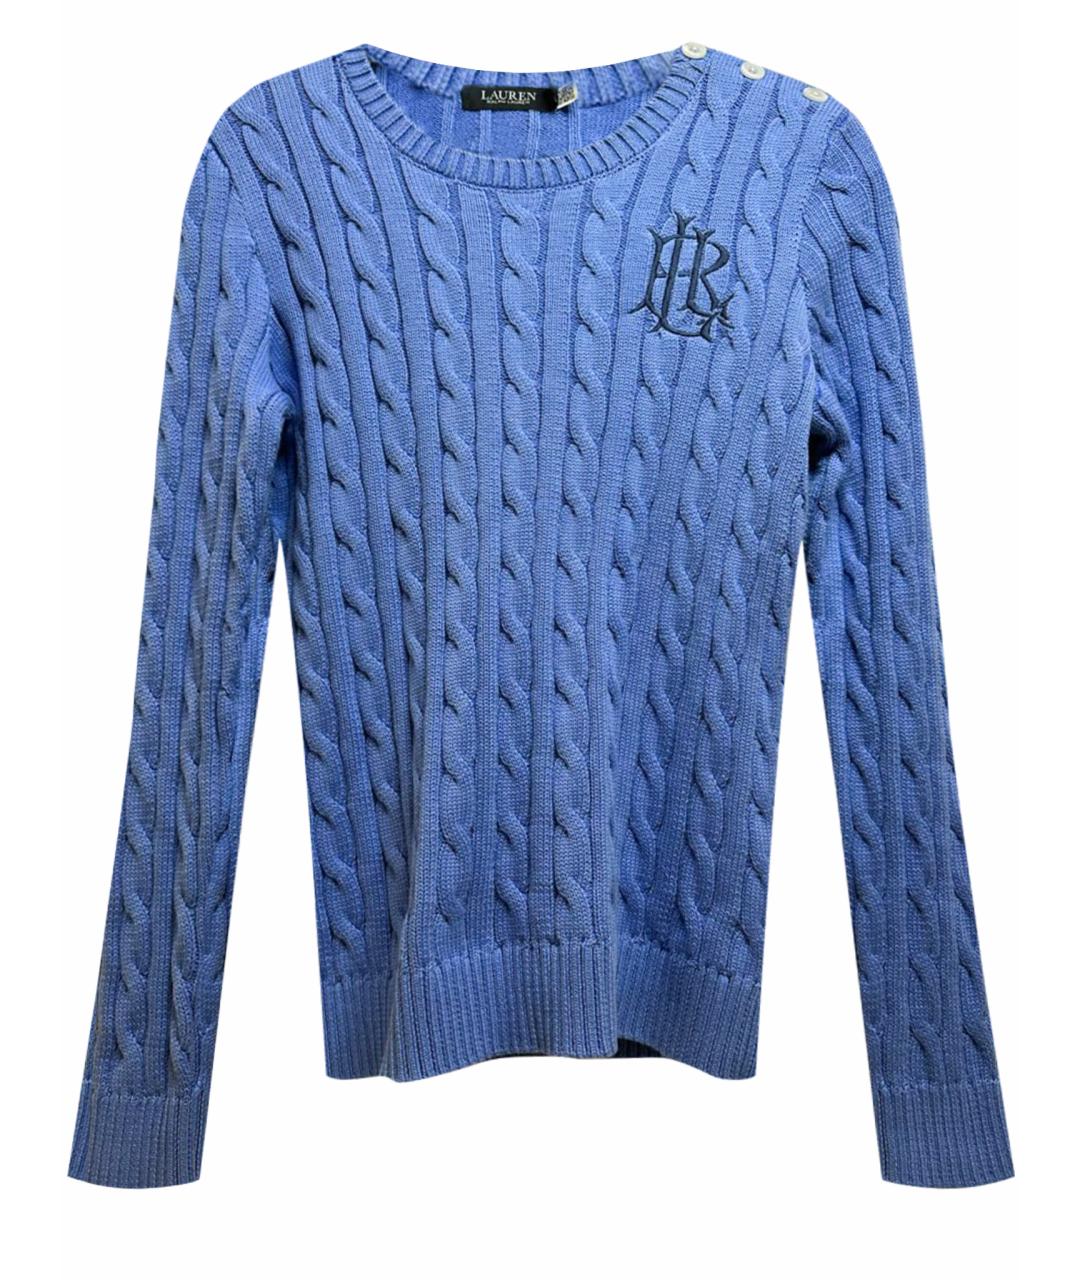 POLO RALPH LAUREN Синий хлопковый джемпер / свитер, фото 1